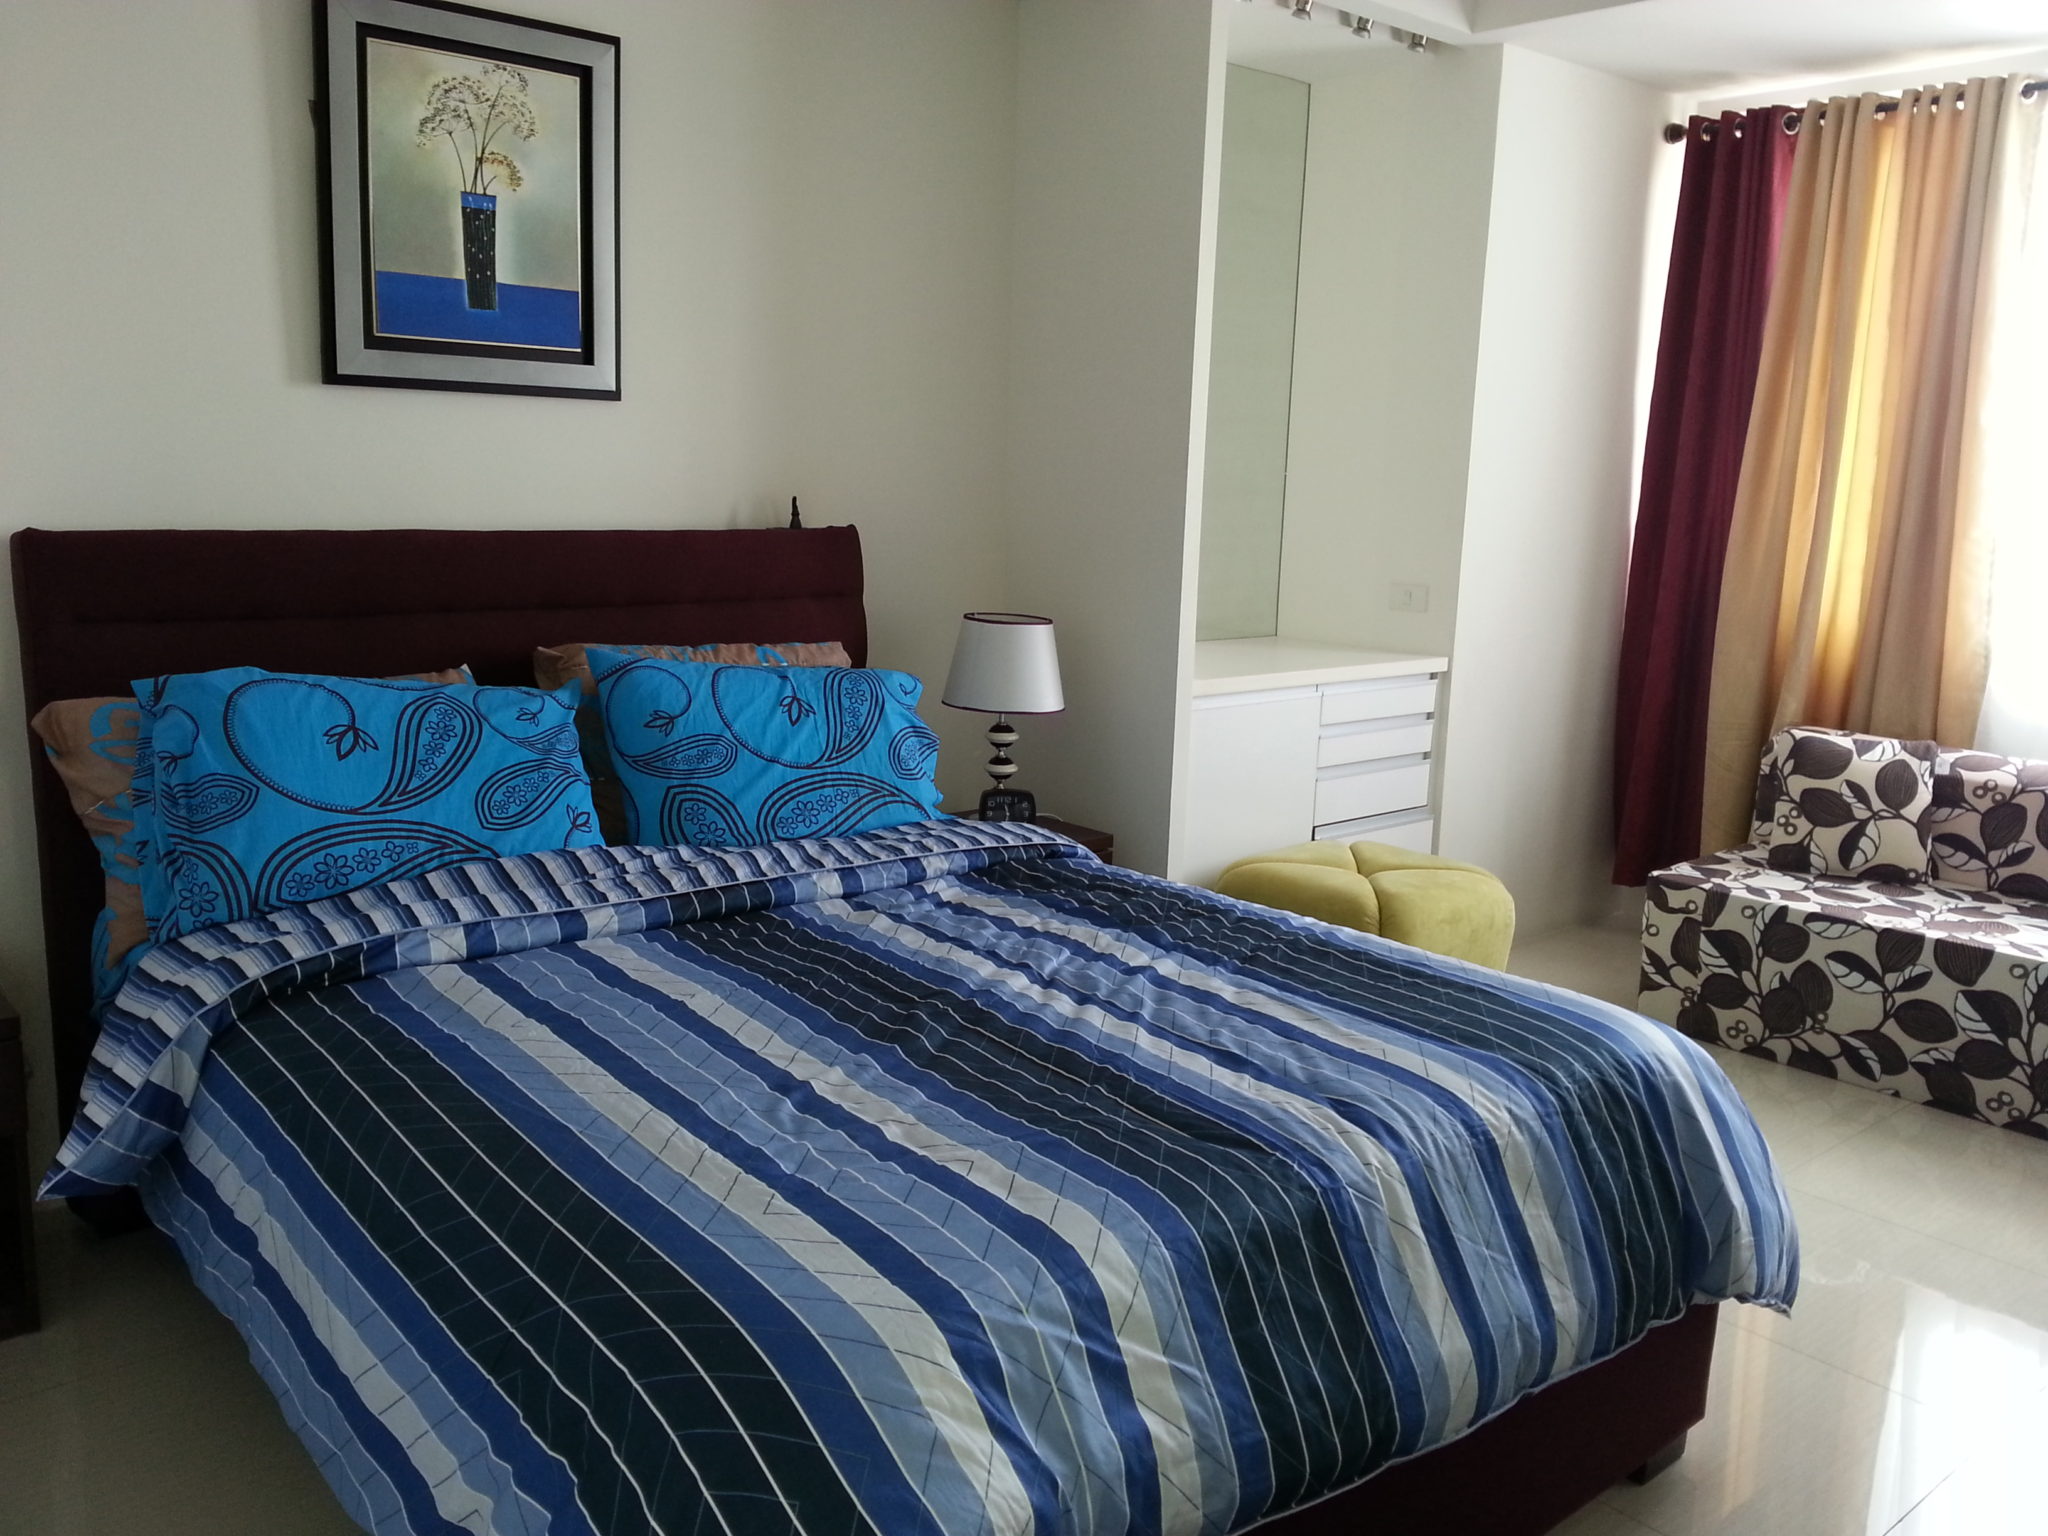 RCP144 1 Bedroom Condominium for Rent in Cebu Business Park Cebu Grand Realty (1)